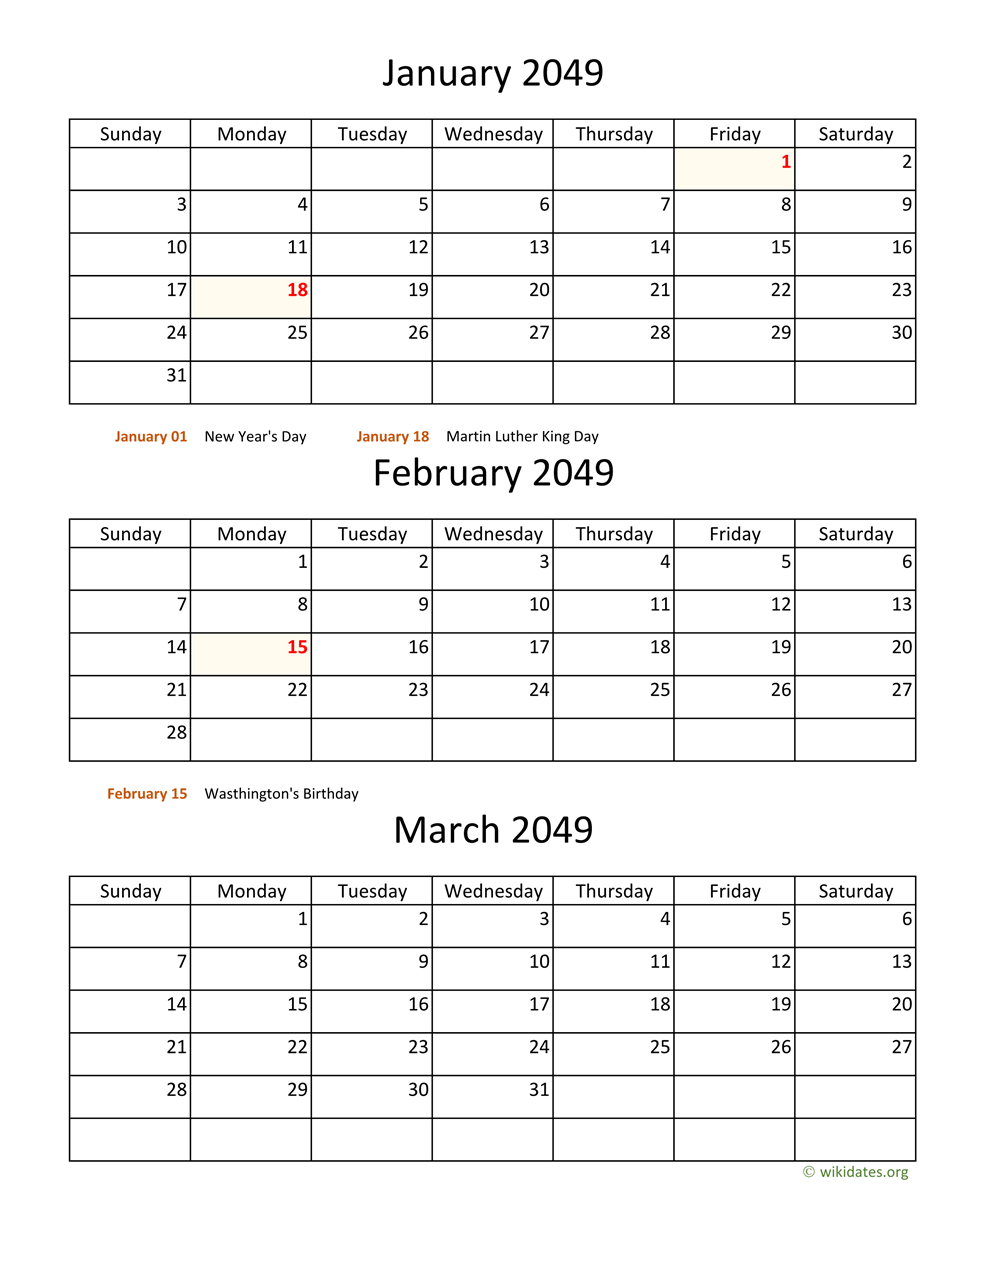 Printable 2049 Calendar | WikiDates.org